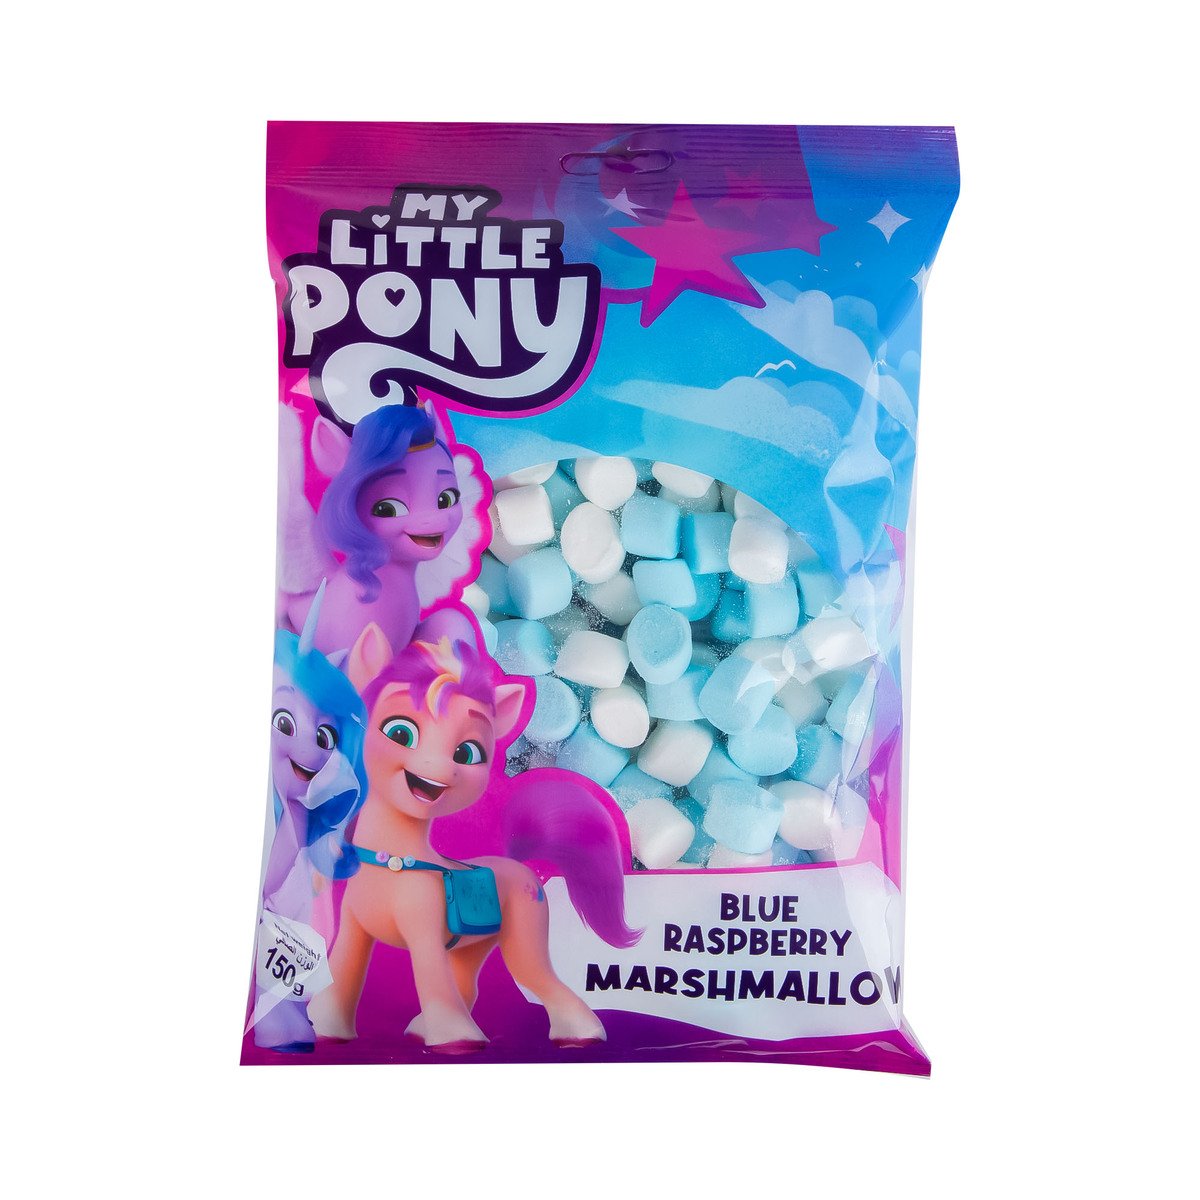 My Little Pony Blue Raspberry Marshmallow 150 g